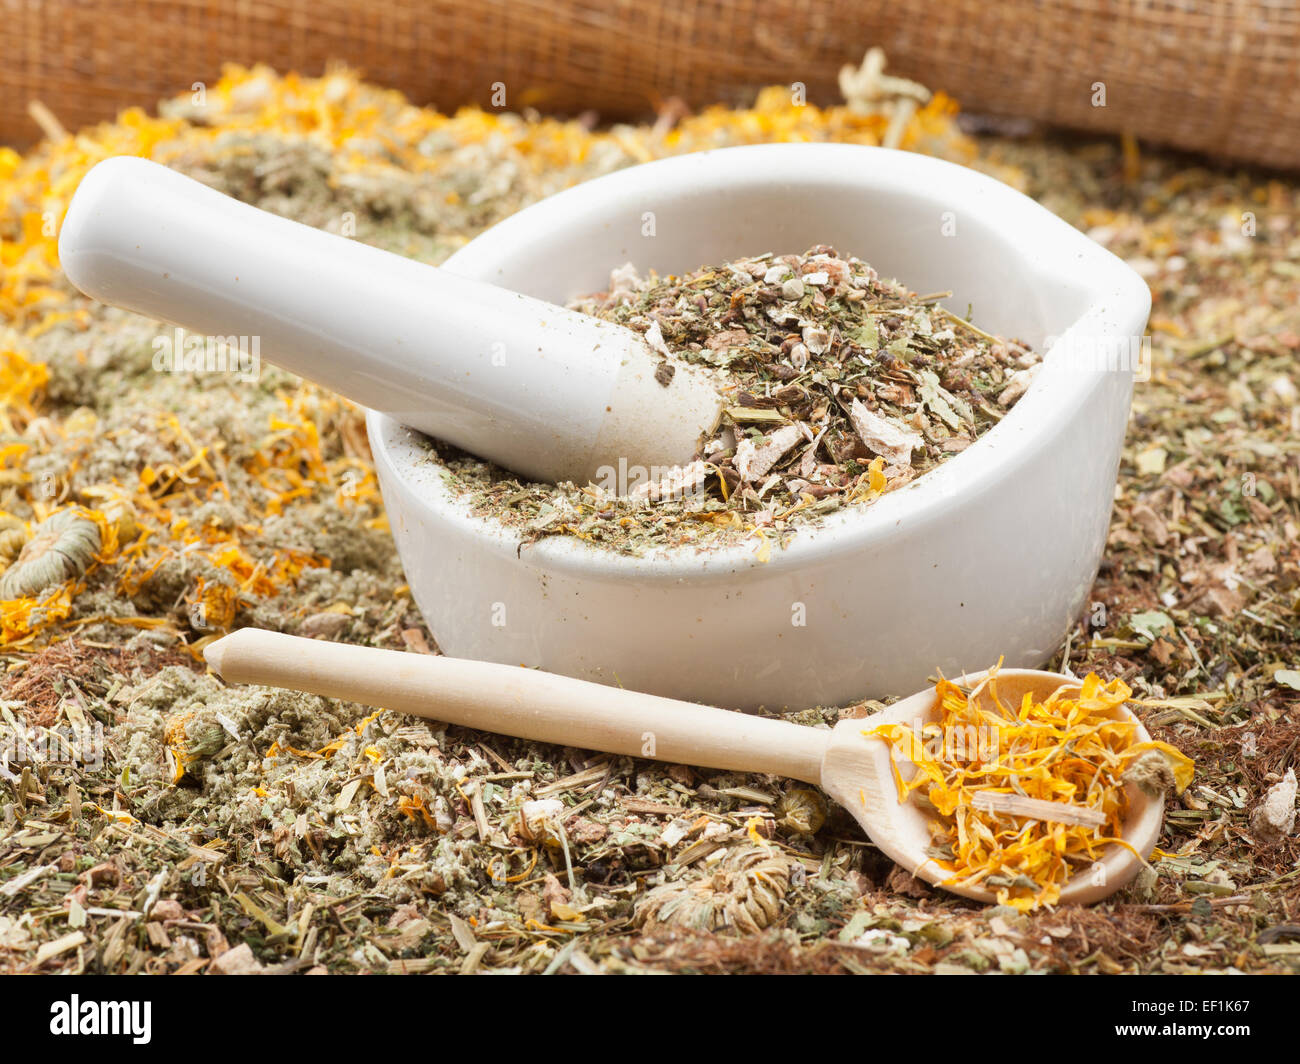 mortar, pestle and healing herbs, herbal medicine Stock Photo - Alamy